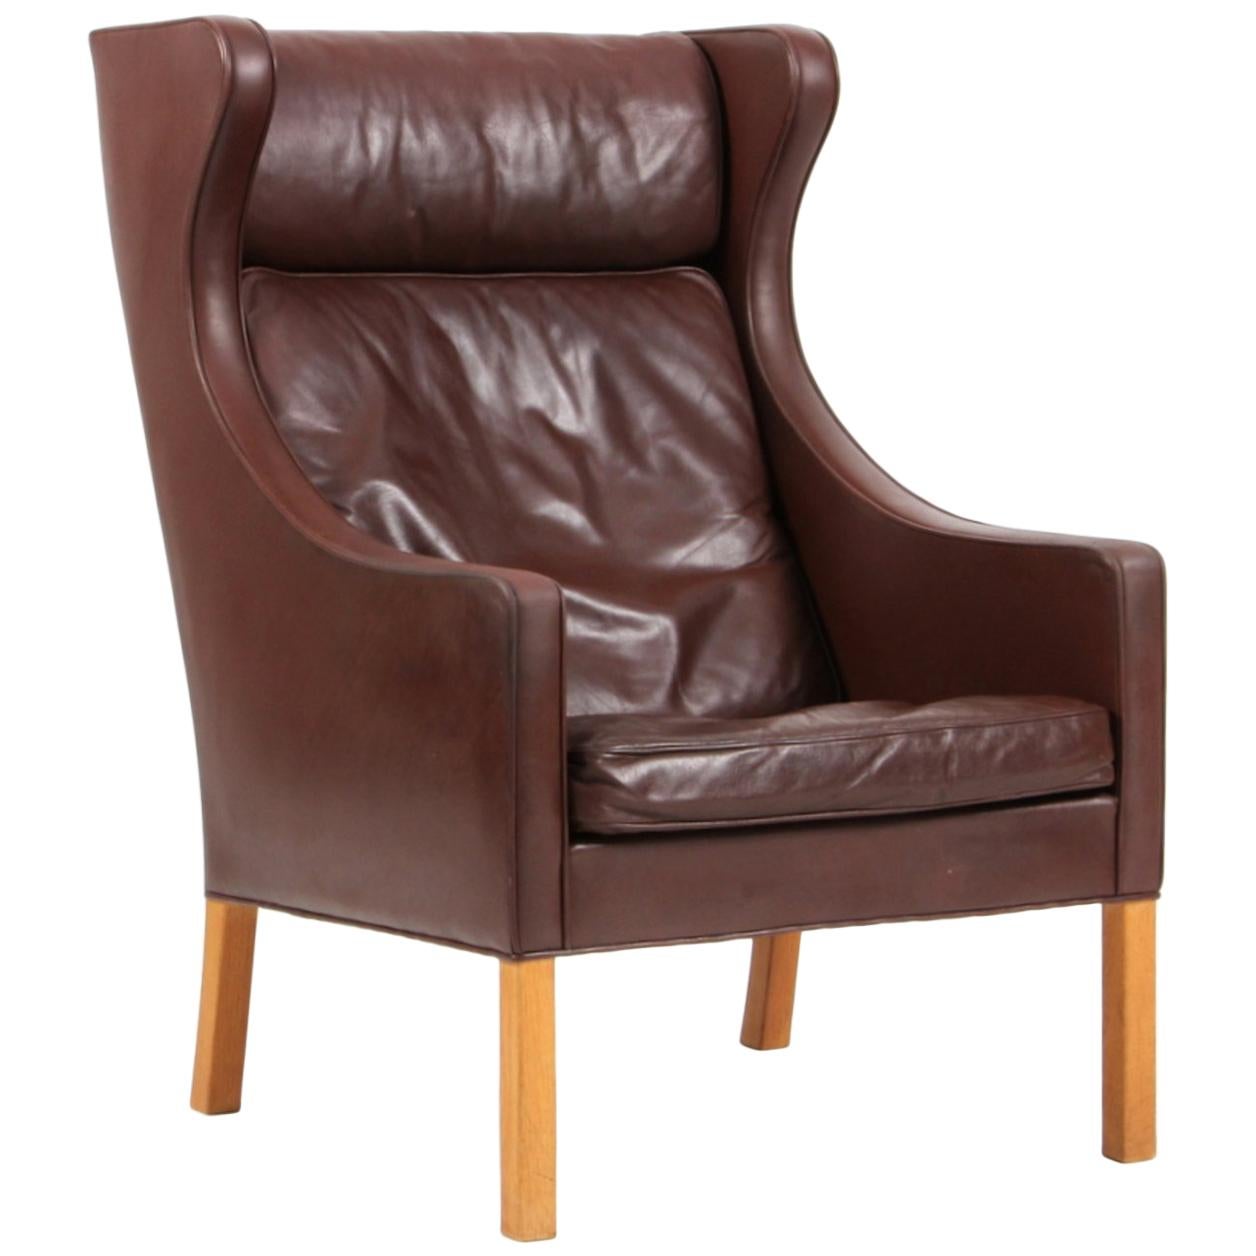 Børge Mogensen Wing Back Chair in Brown Original Leather, Model 2204